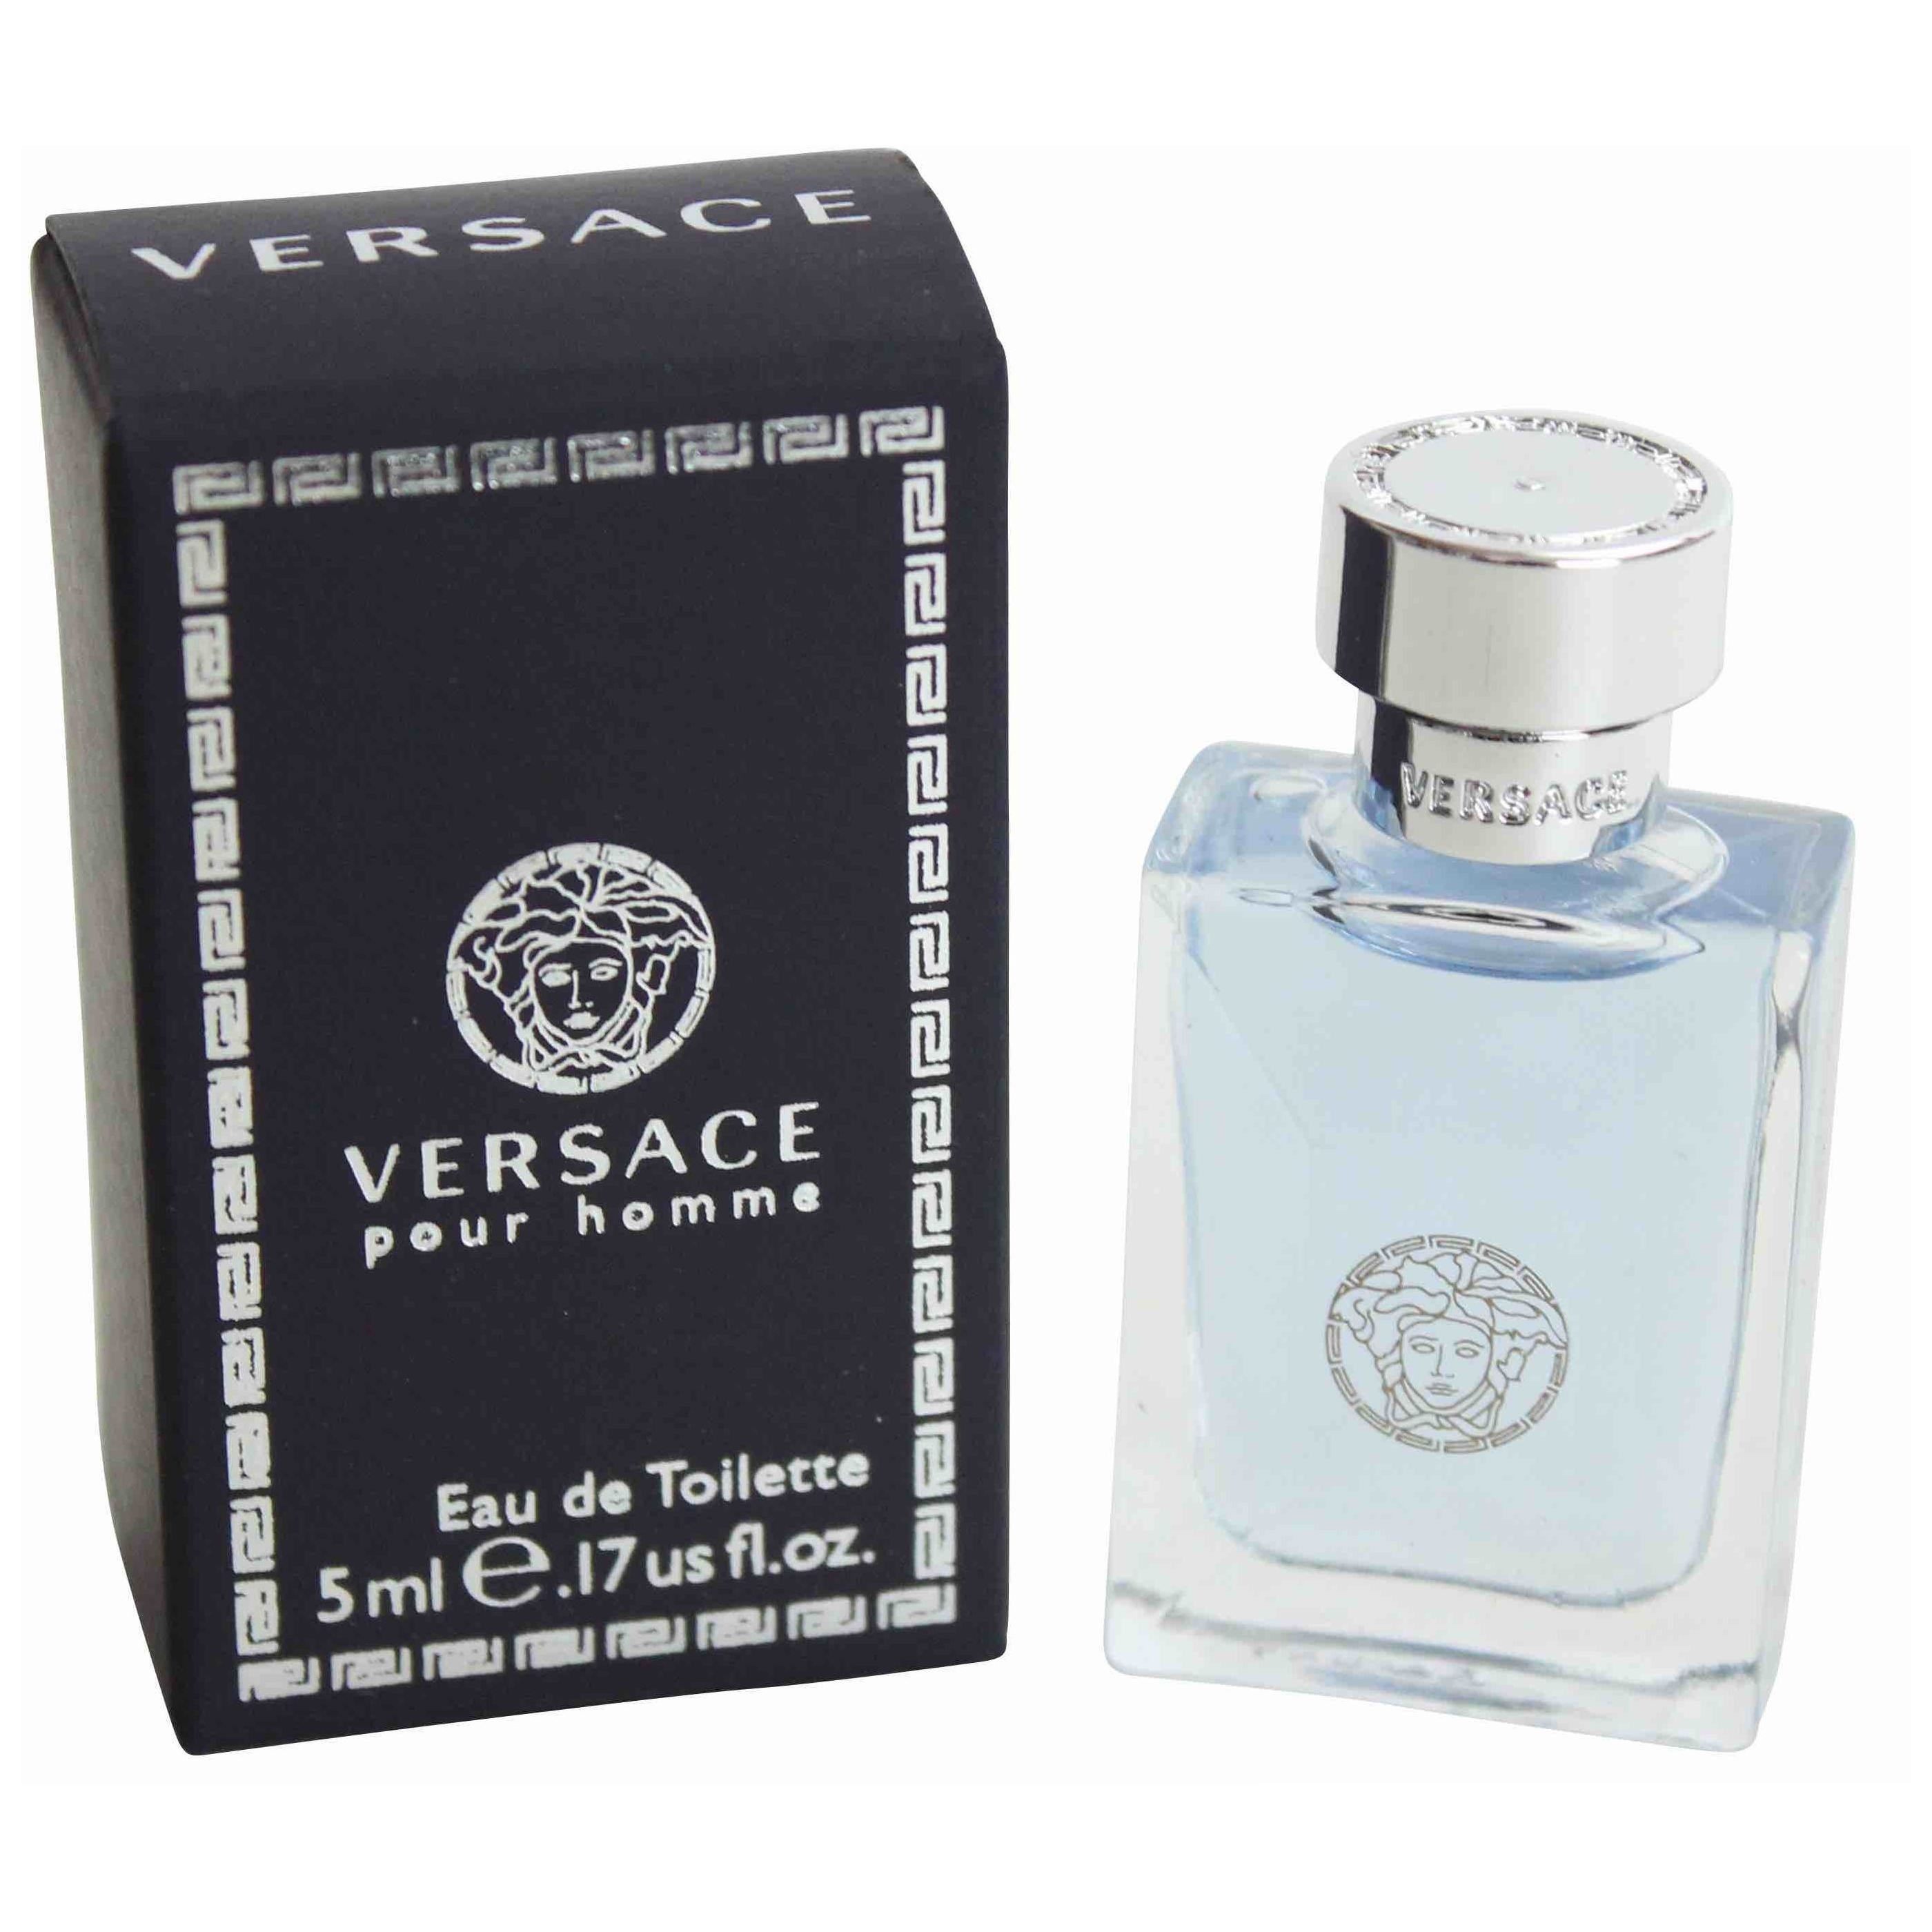 Versace perfumy